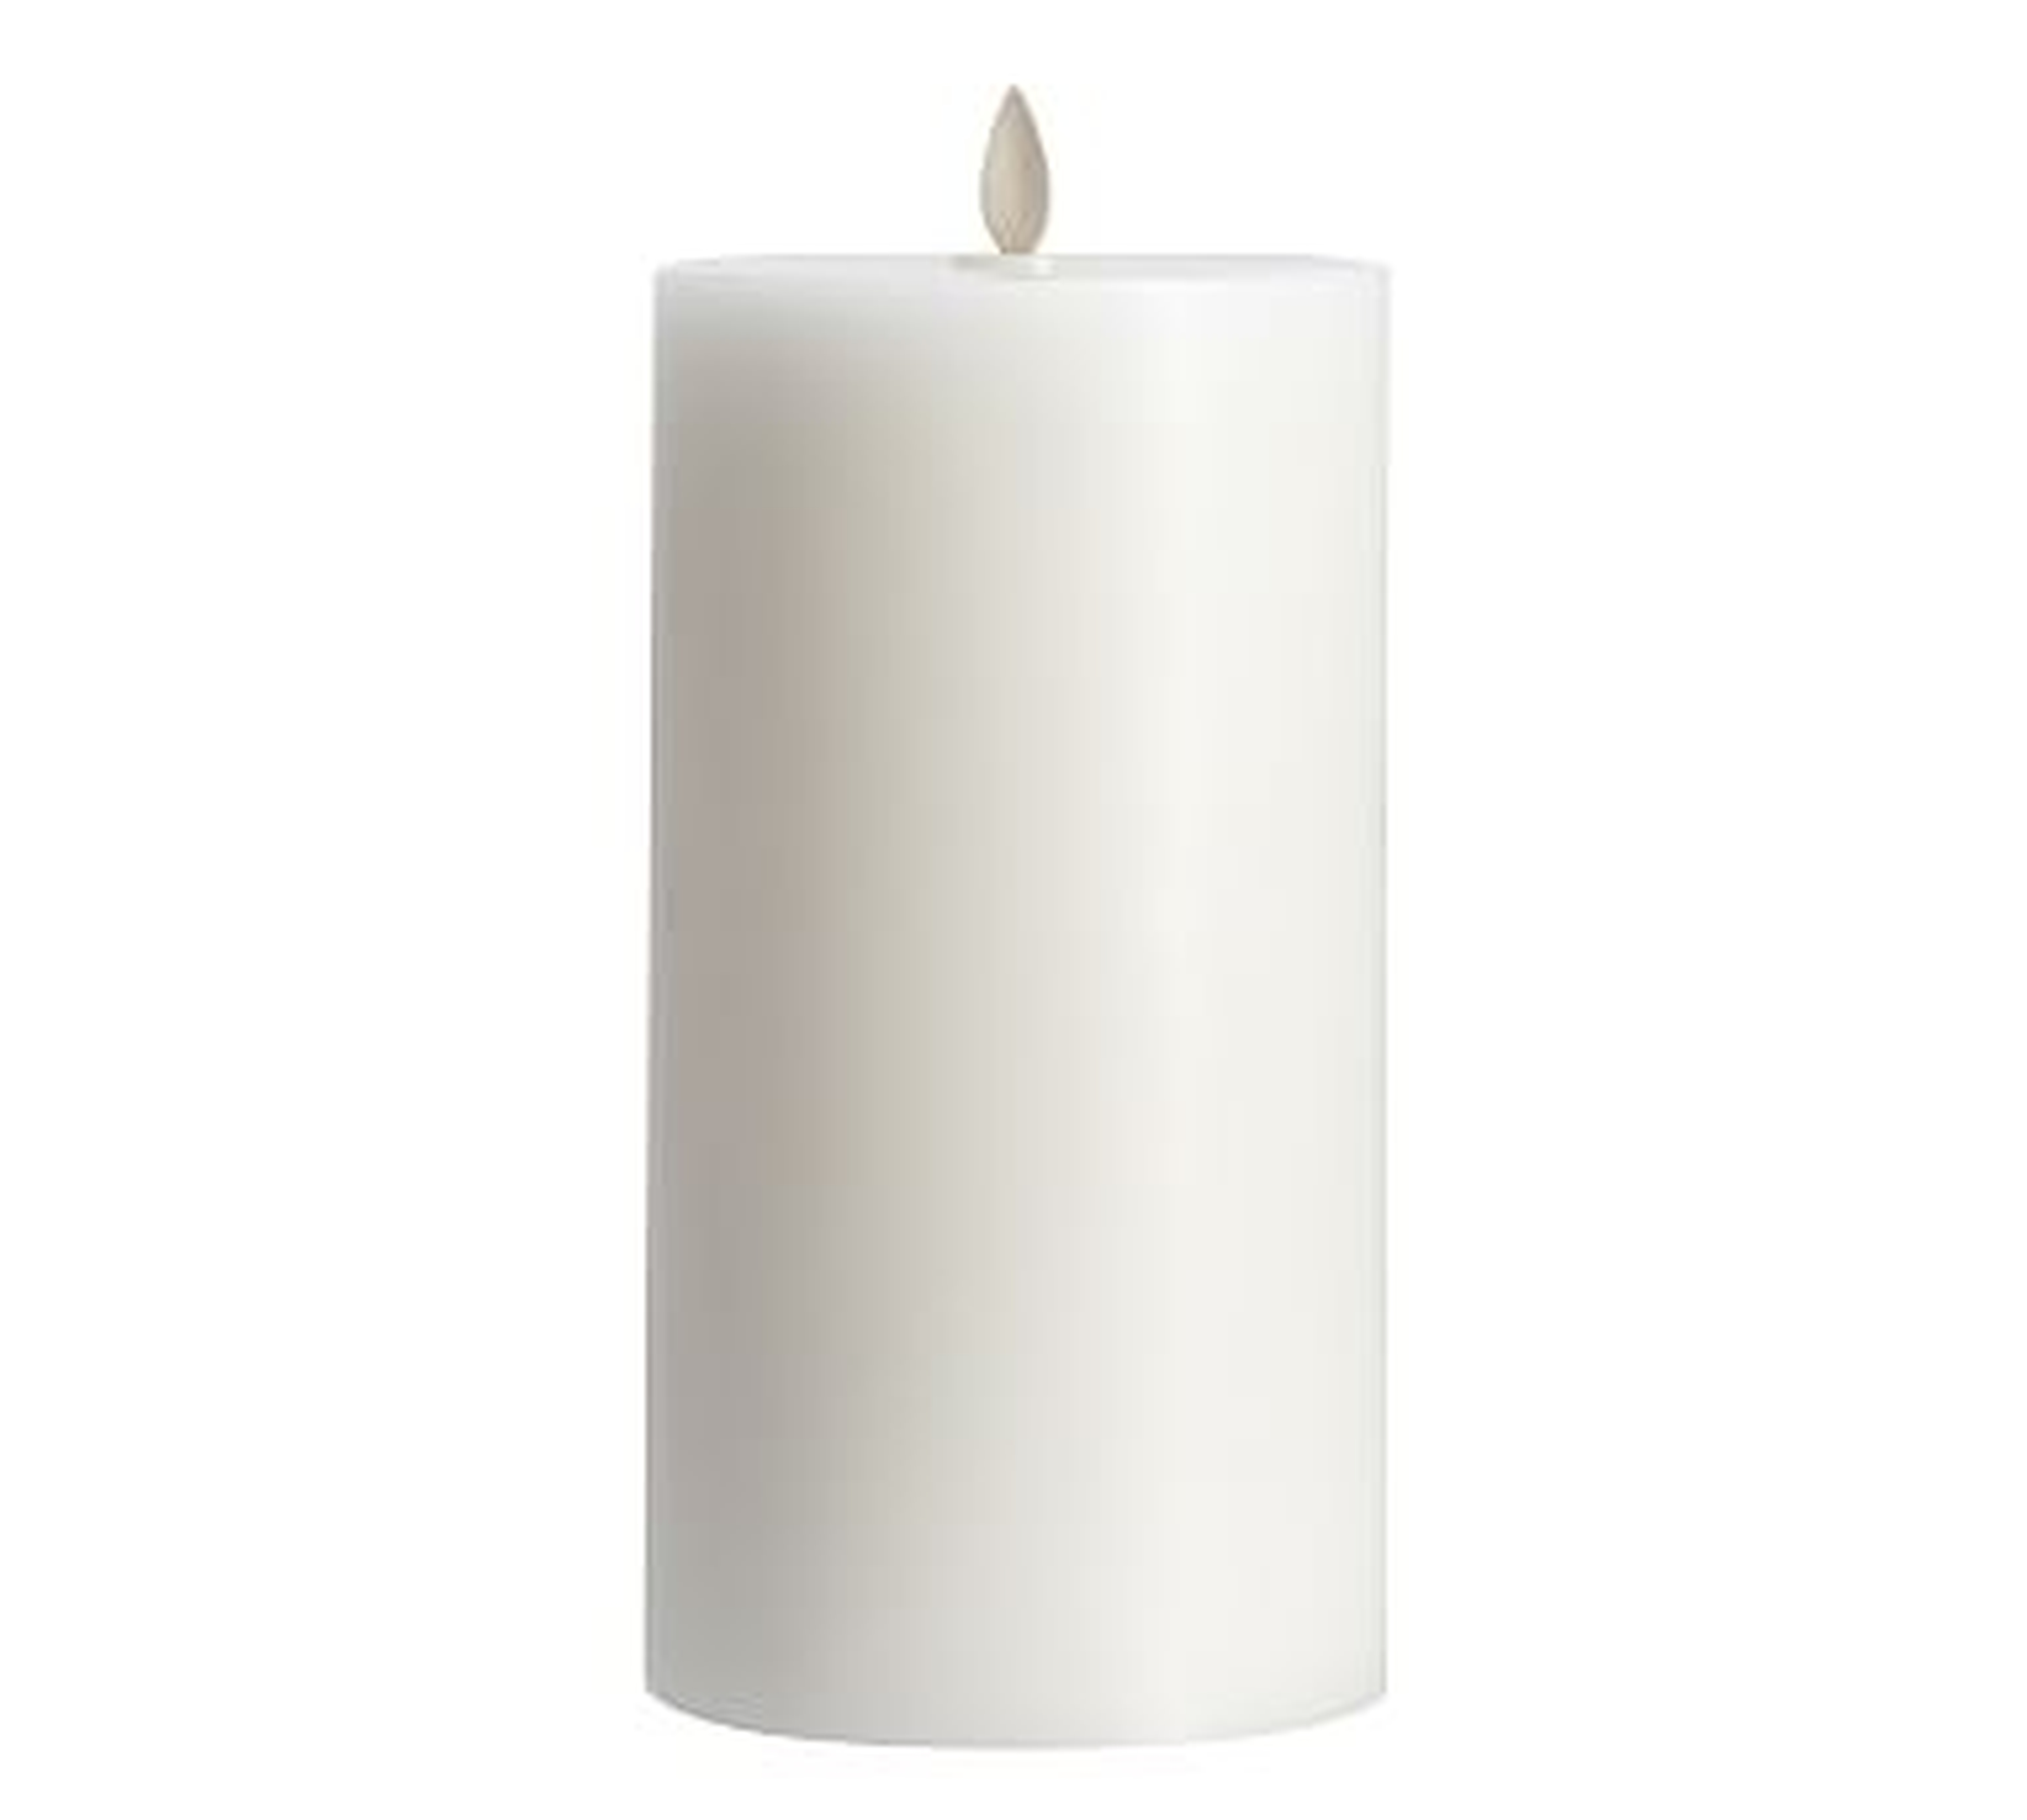 Premium Flickering Flameless Wax Pillar Candle, 4"x8" - White - Pottery Barn